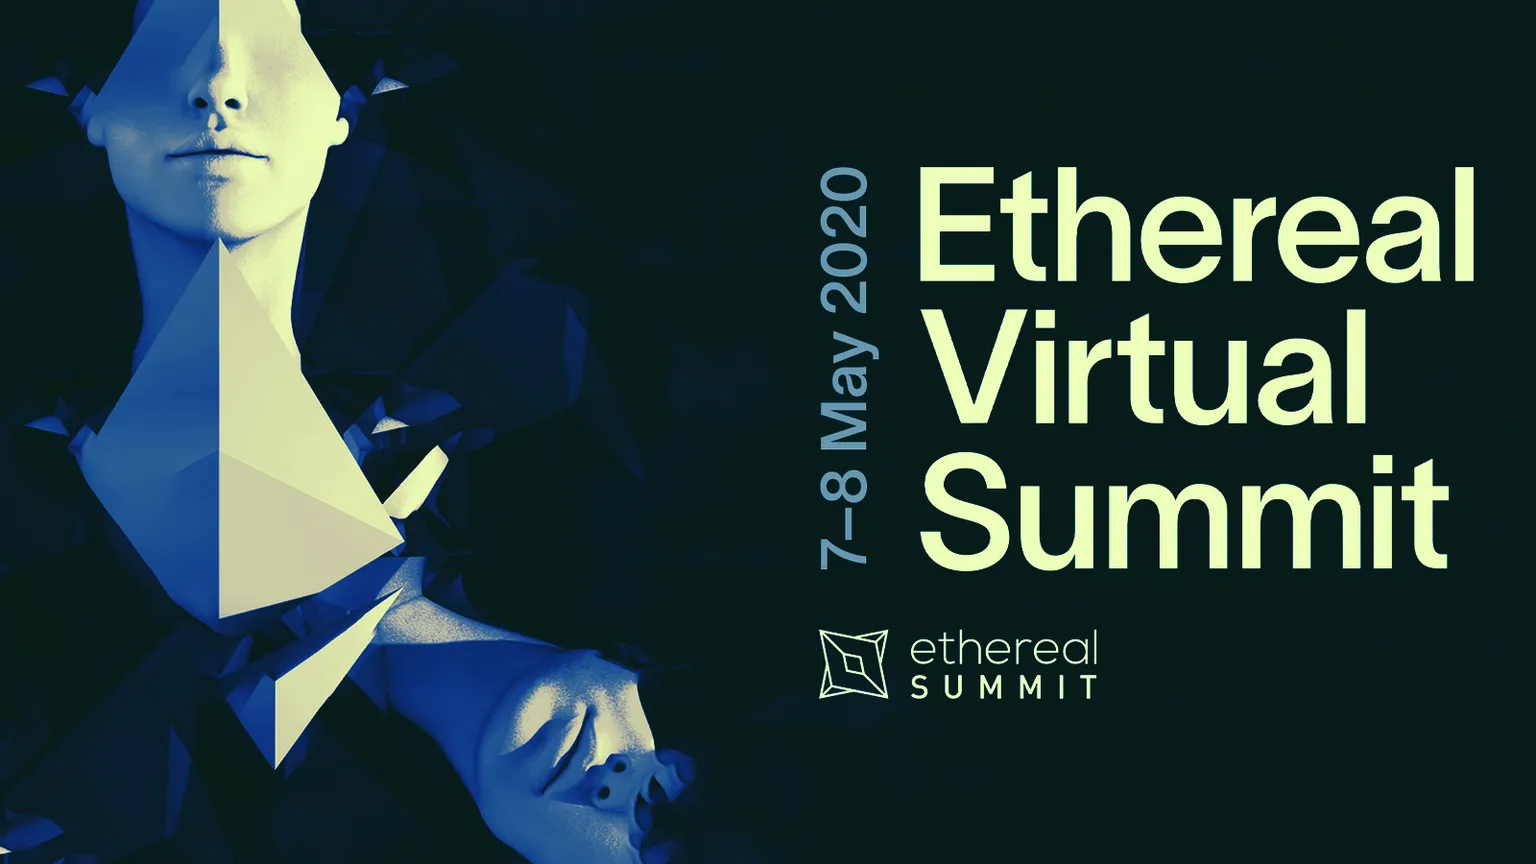 Cumbre Virtual Ethereal se lanzará en Mayo. Image: Ethereal.